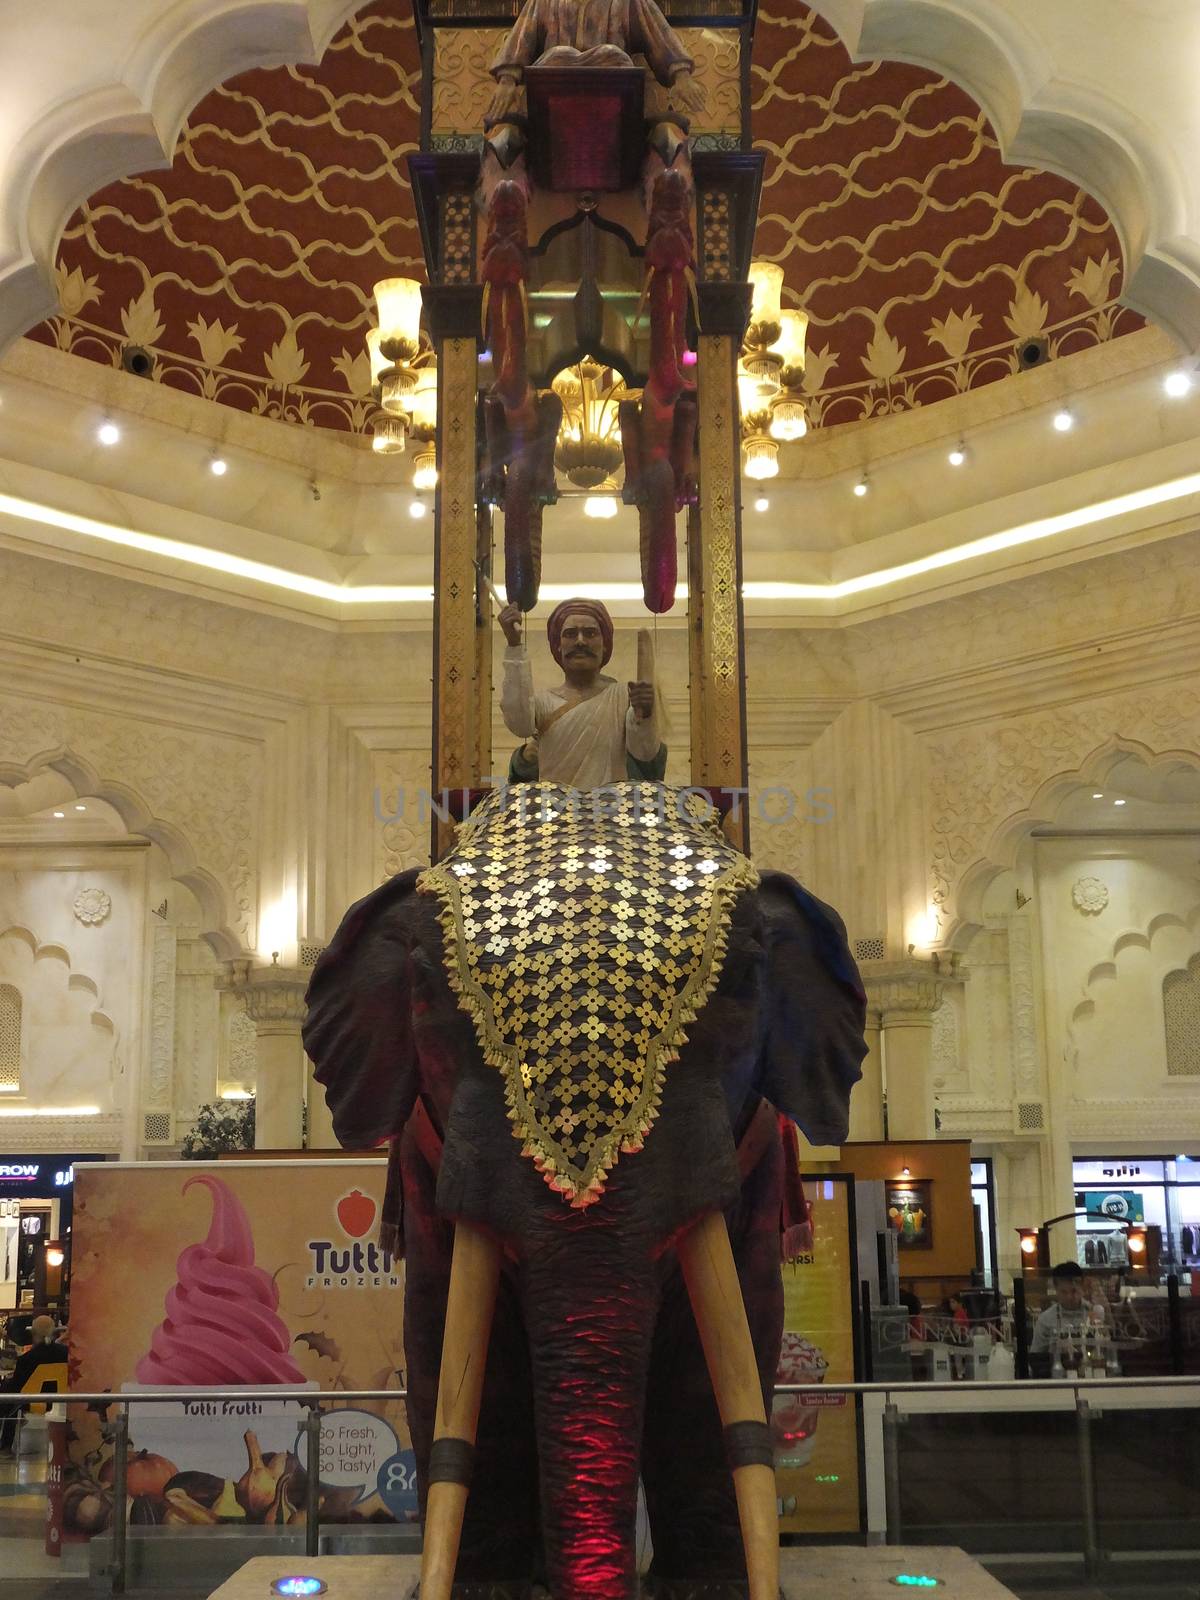 India Court at Ibn Battuta Mall in Dubai, UAE by sainaniritu